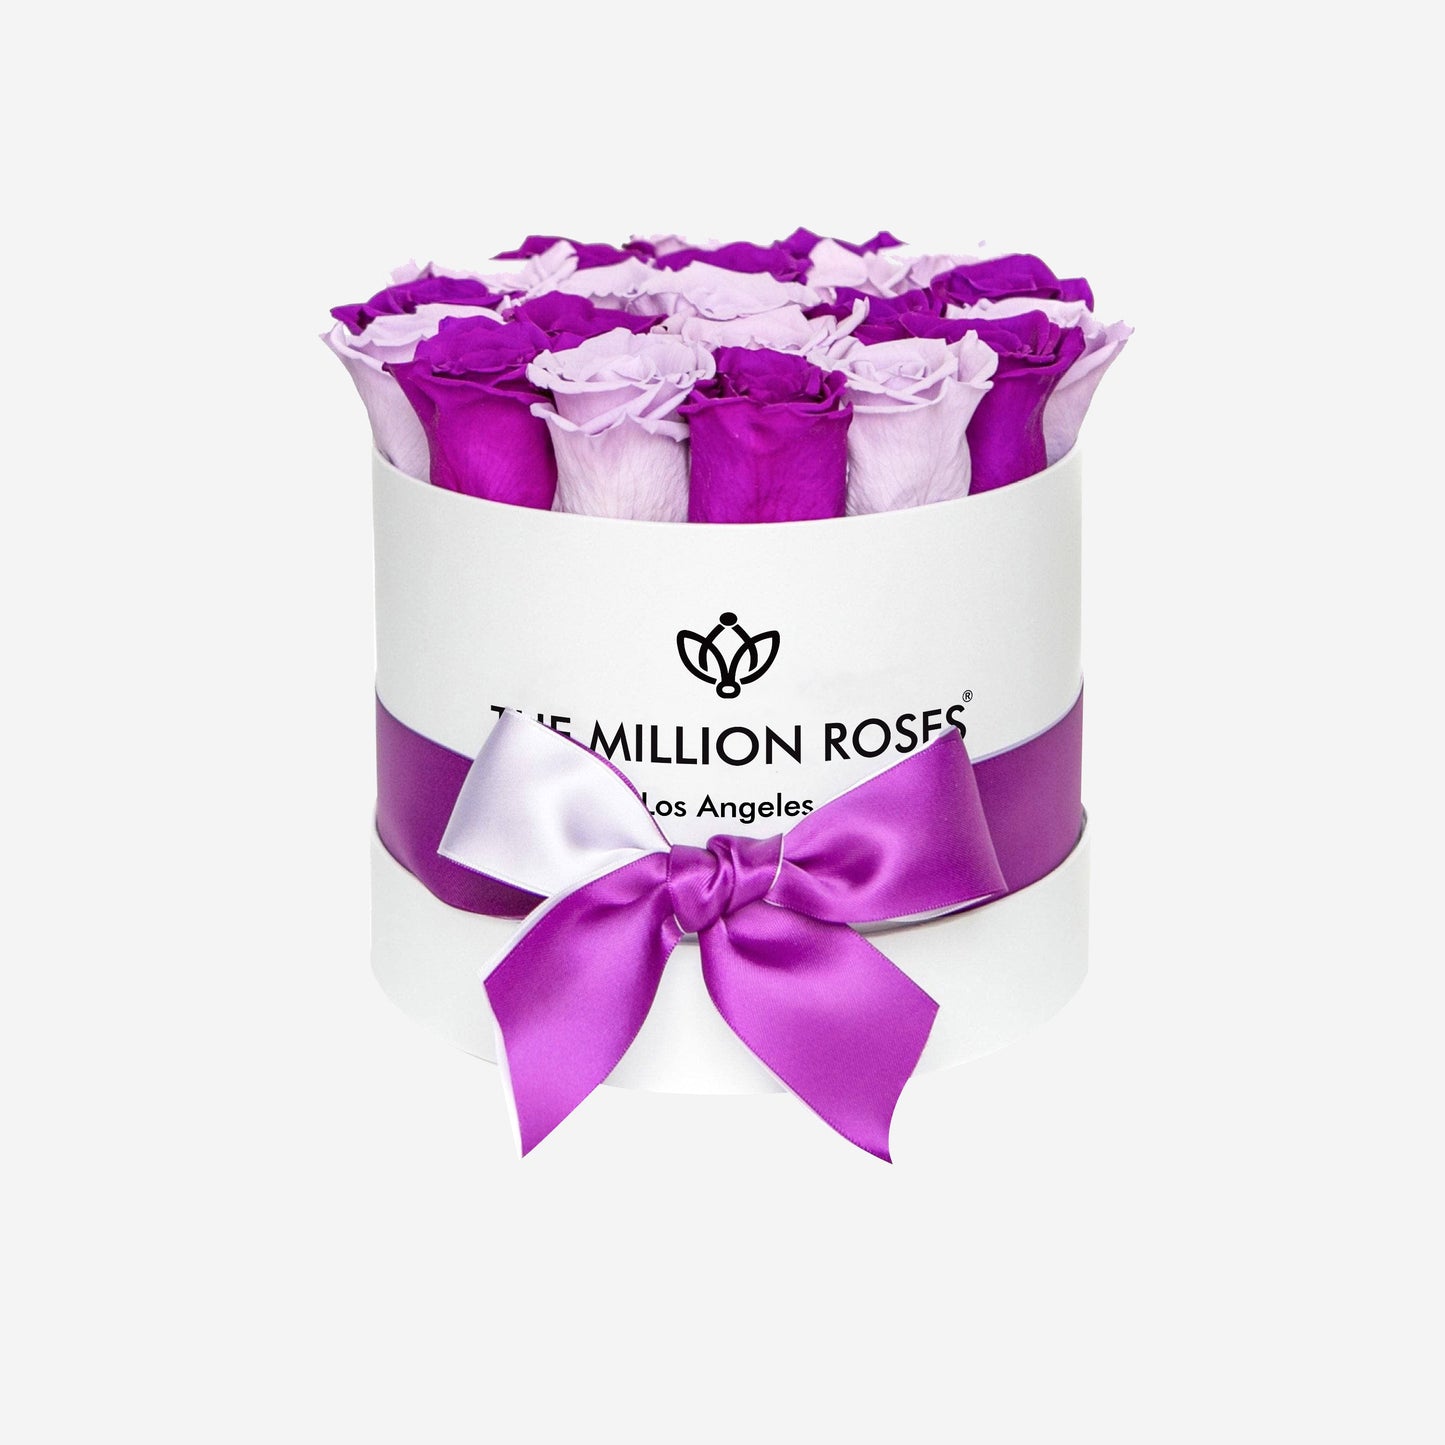 Classic White Box | Purple & Lavender Roses - The Million Roses